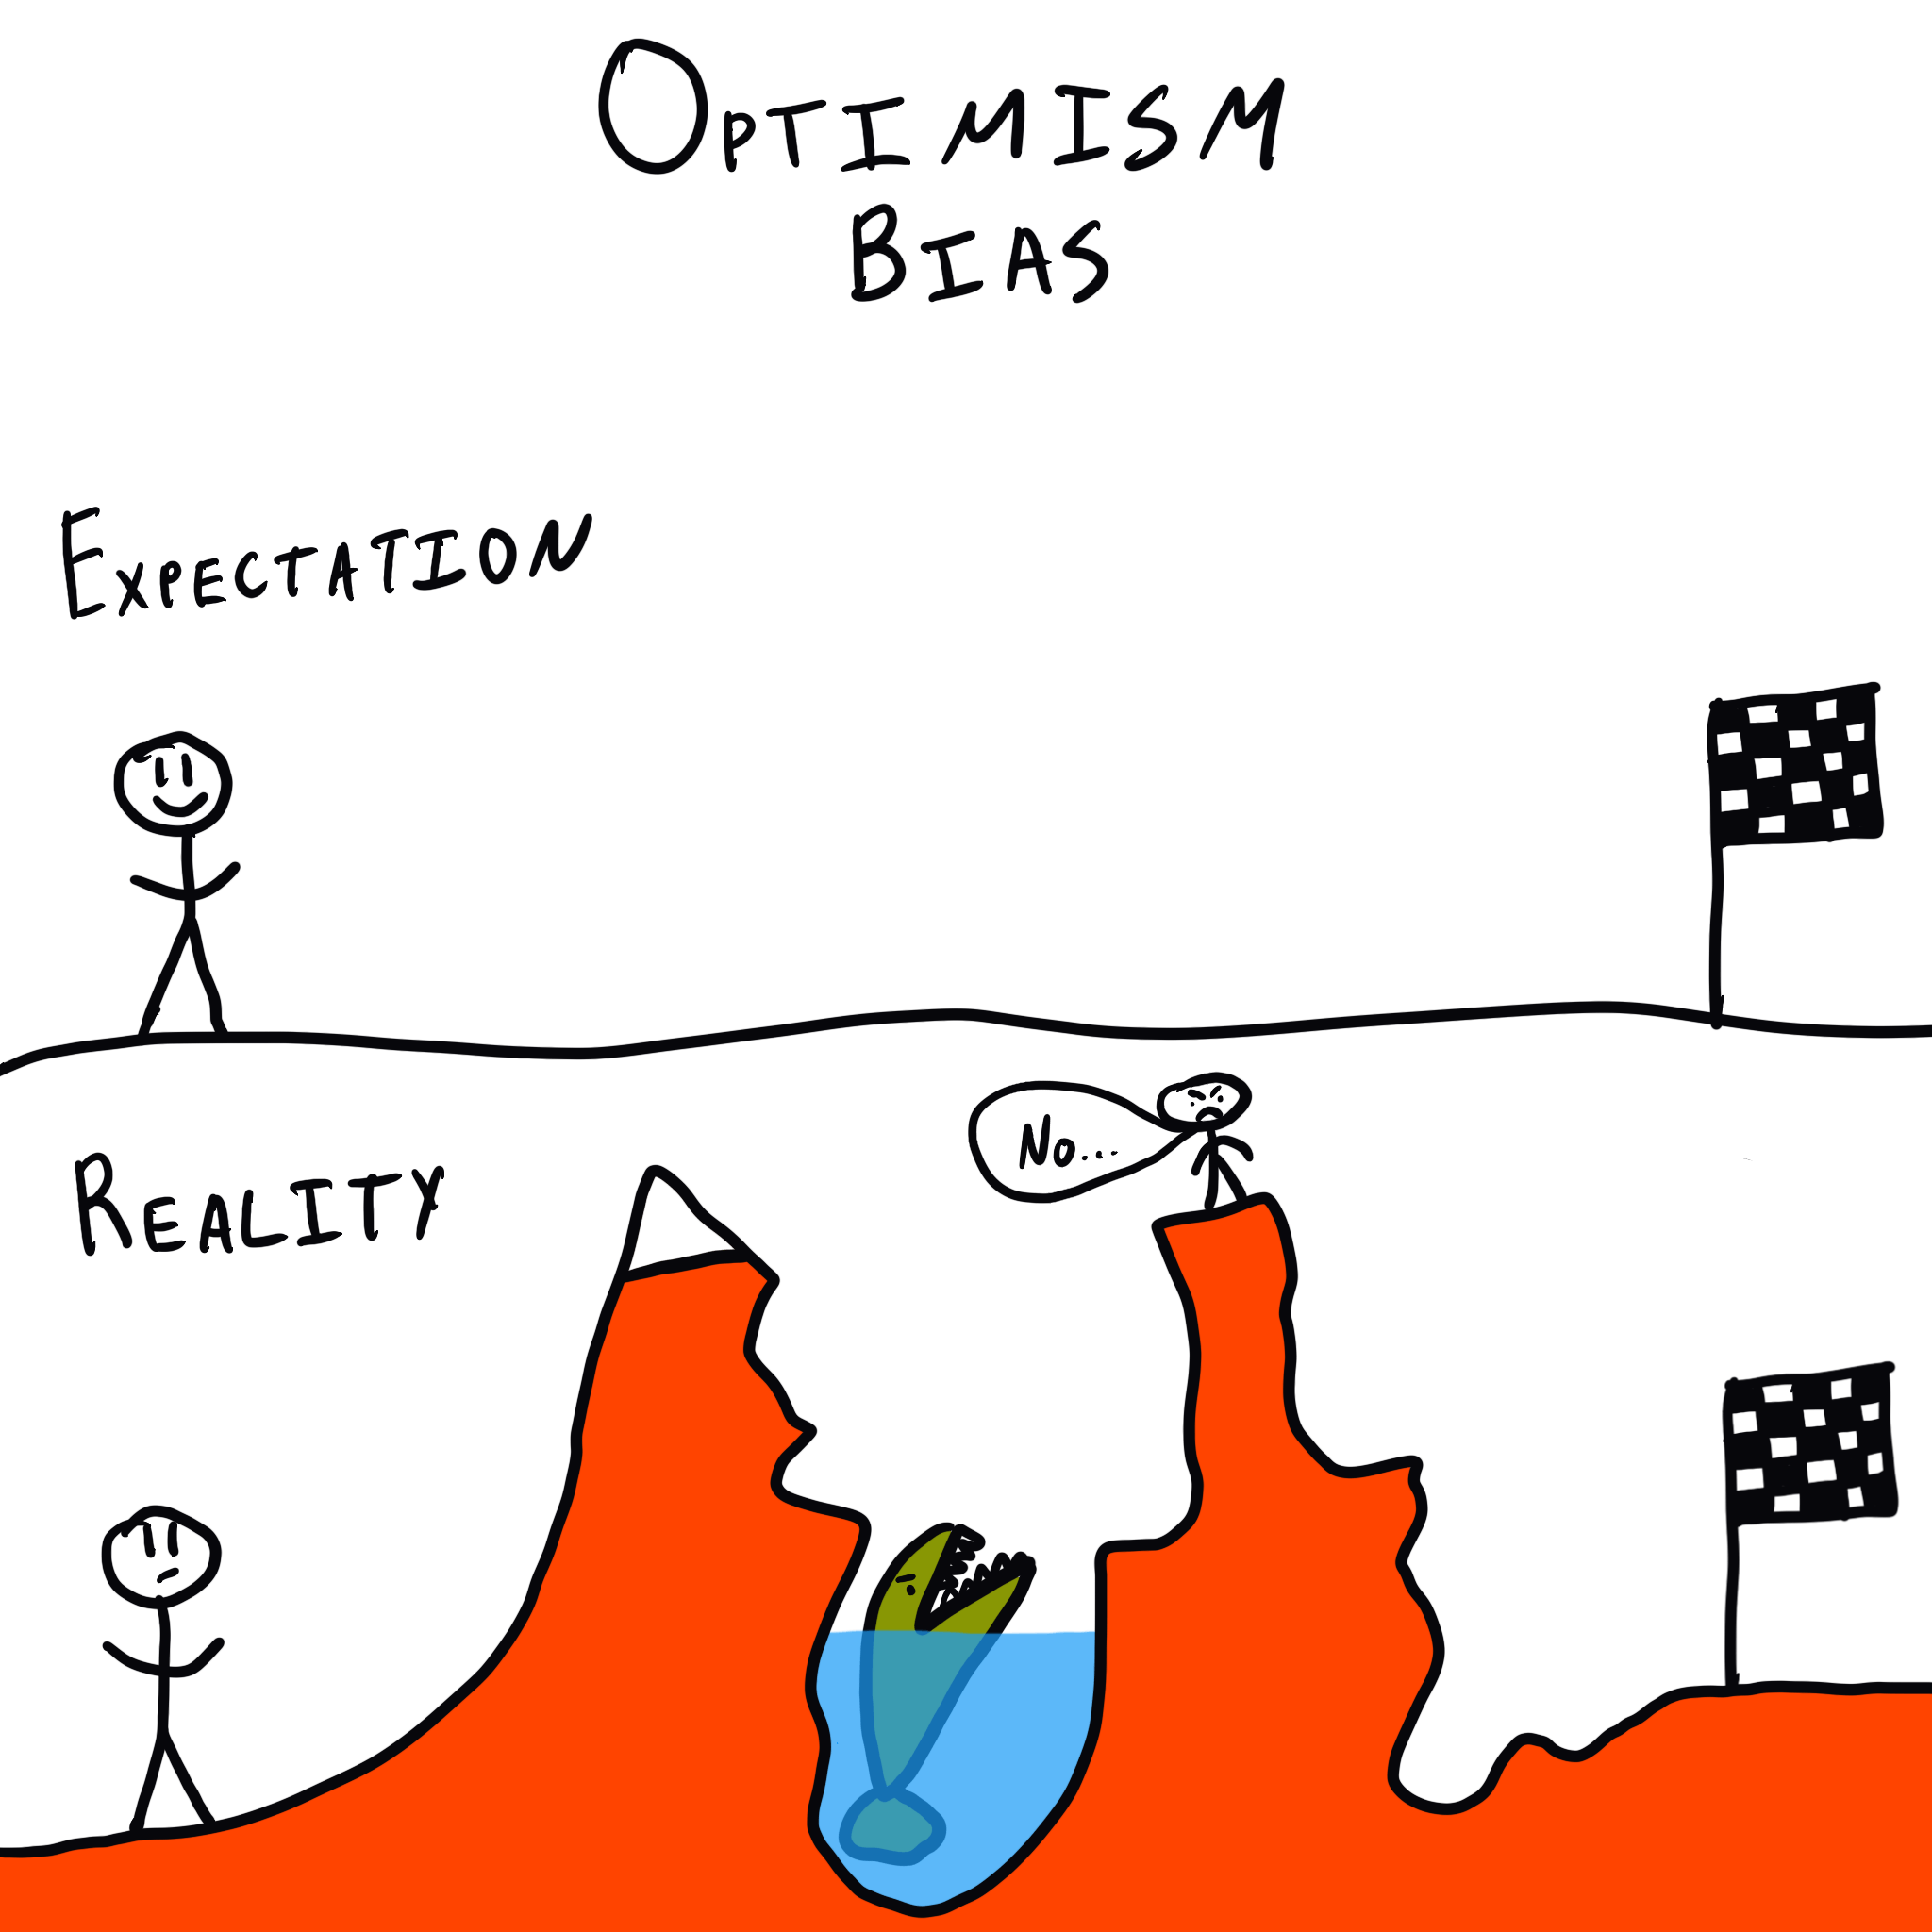 Negativity Bias - The Decision Lab